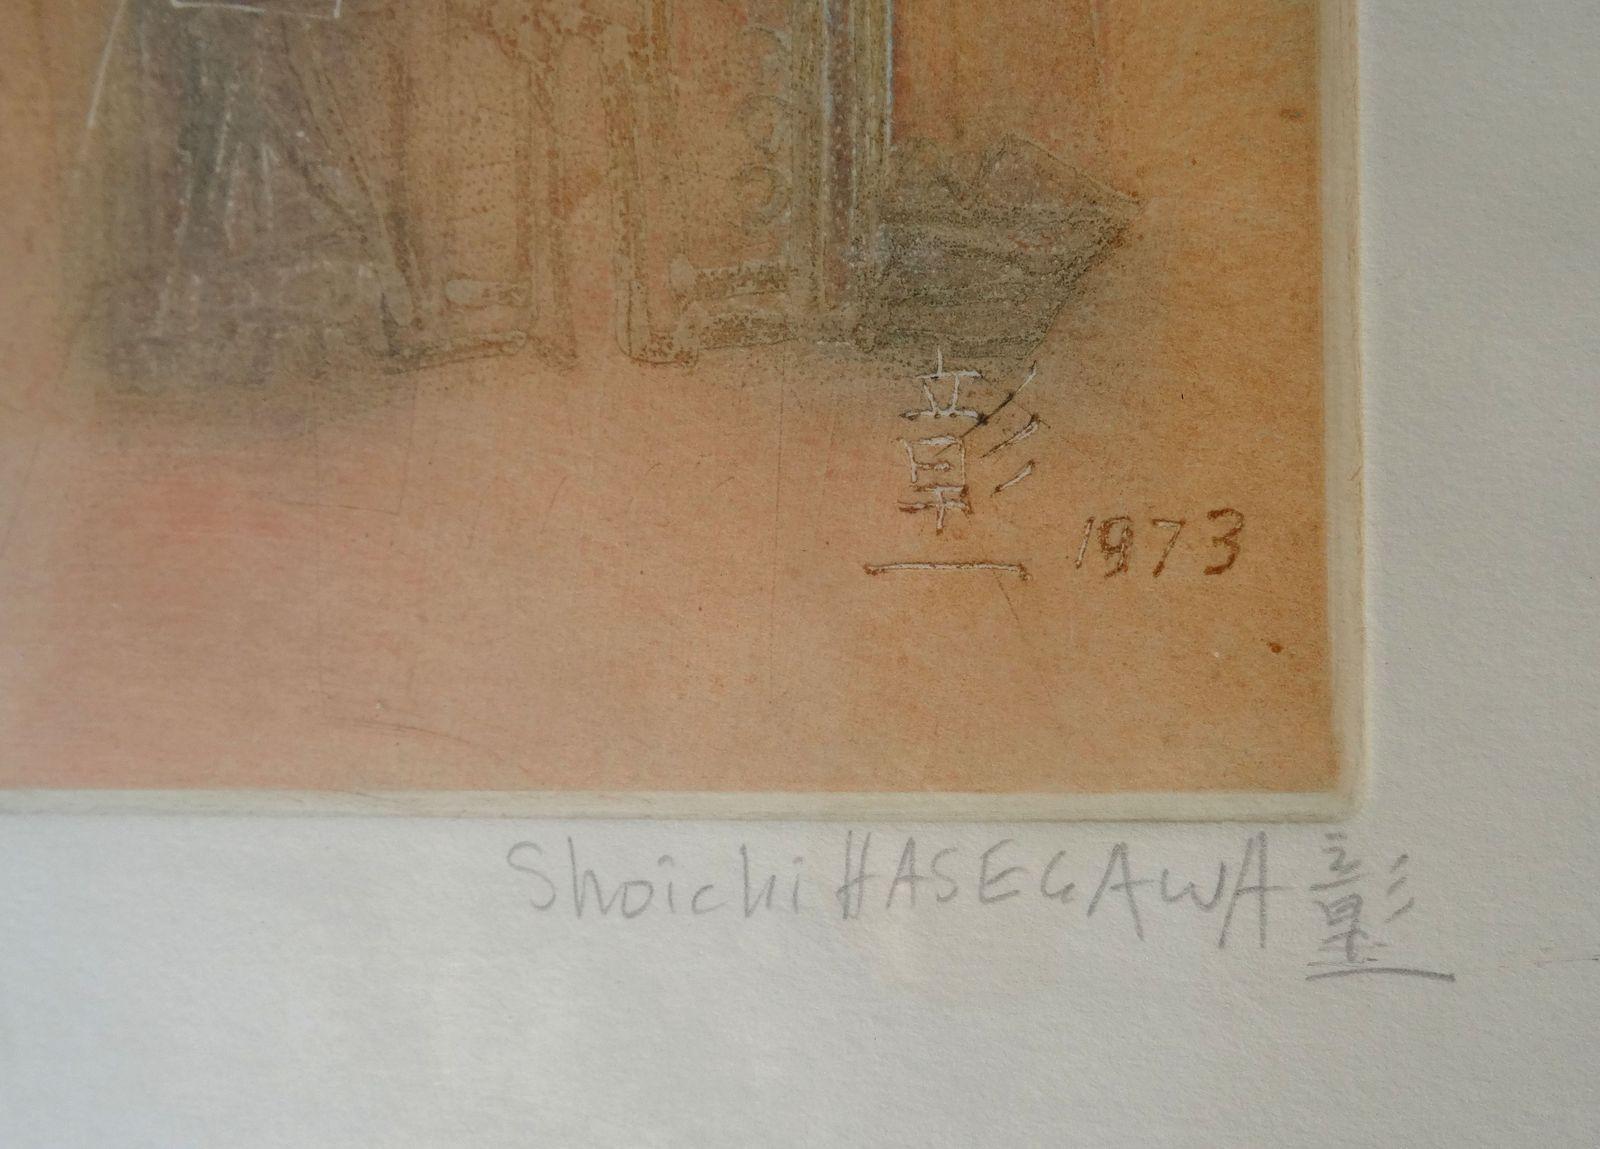 Lever du jour. 1973. XXl / XL paper, etching, 50x60 cm - Print by Shoichi Hasegawa